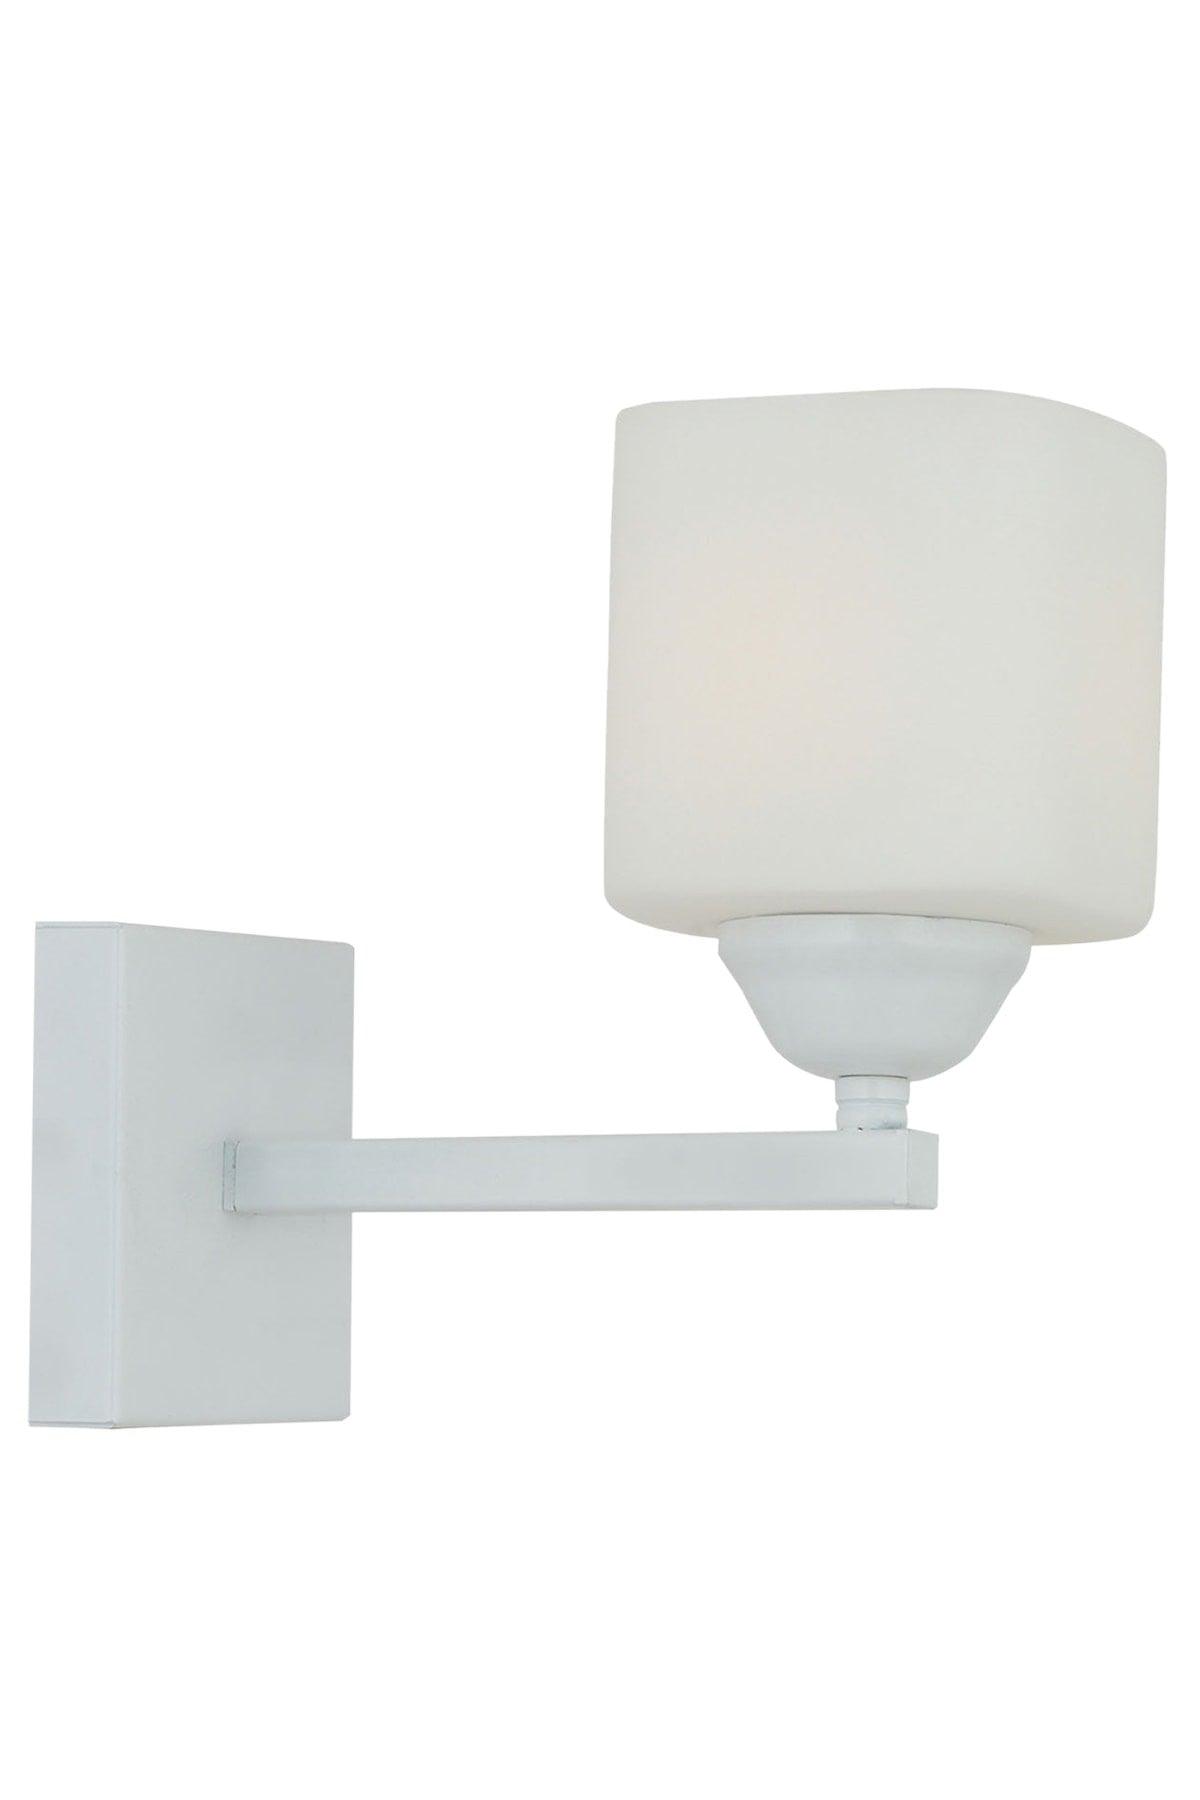 Minel White Wall Lamp Modern Wall Sconce For Bedroom-Bedhead-Bathroom - Swordslife